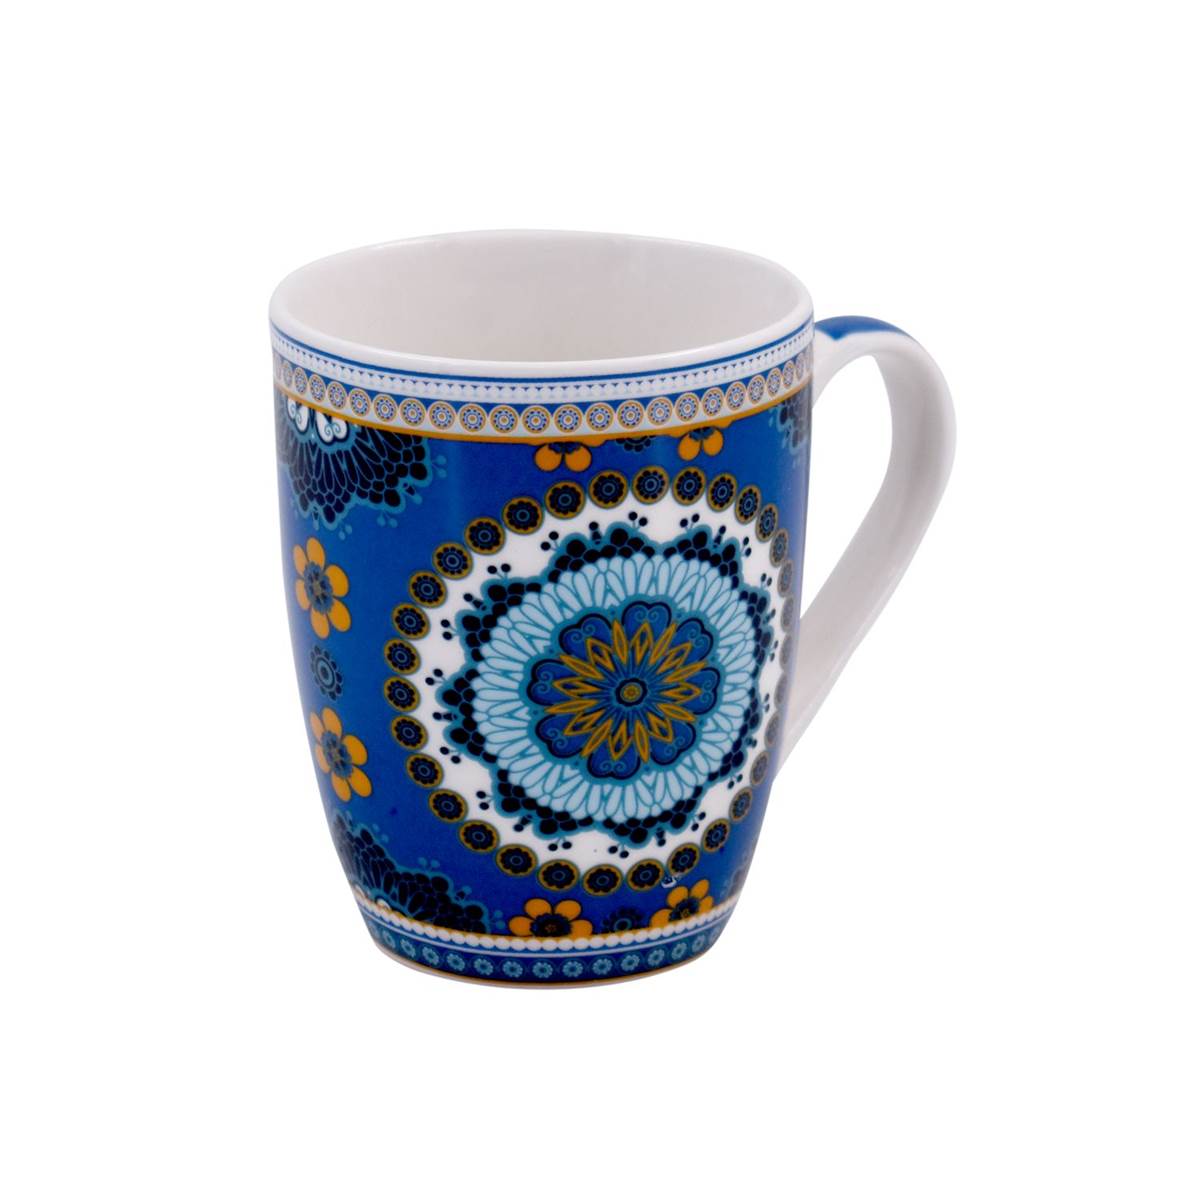 Printed Ceramic Coffee or Tea Mug with handle - 325ml (4129G-B)